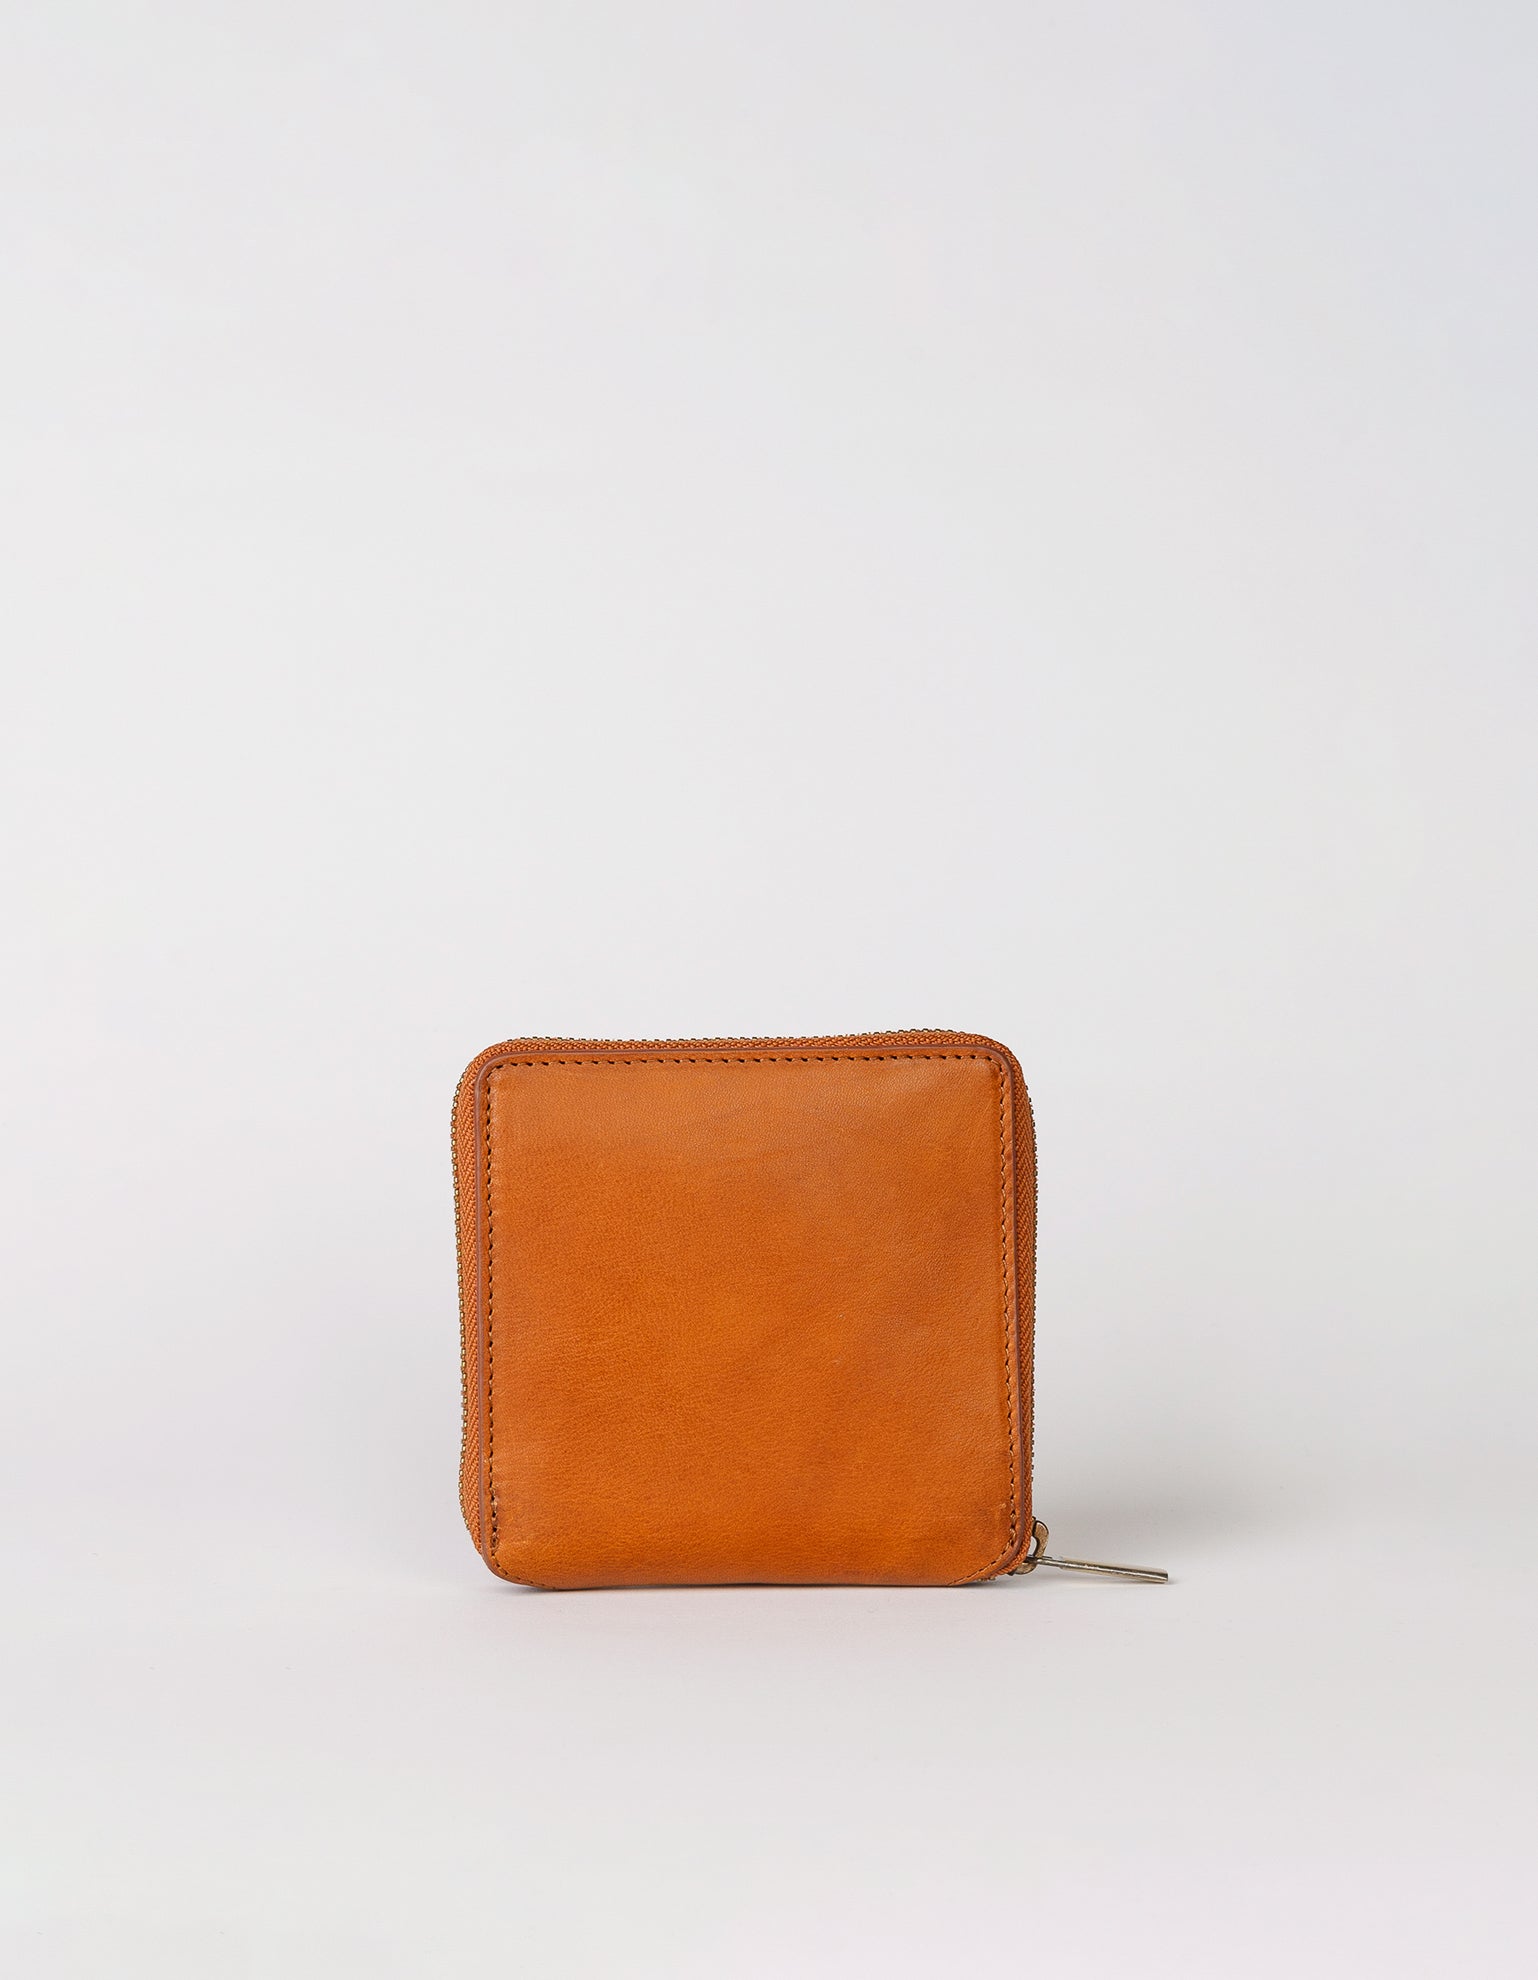 Sonny Square Wallet Cognac Stromboli Leather. Back product picture